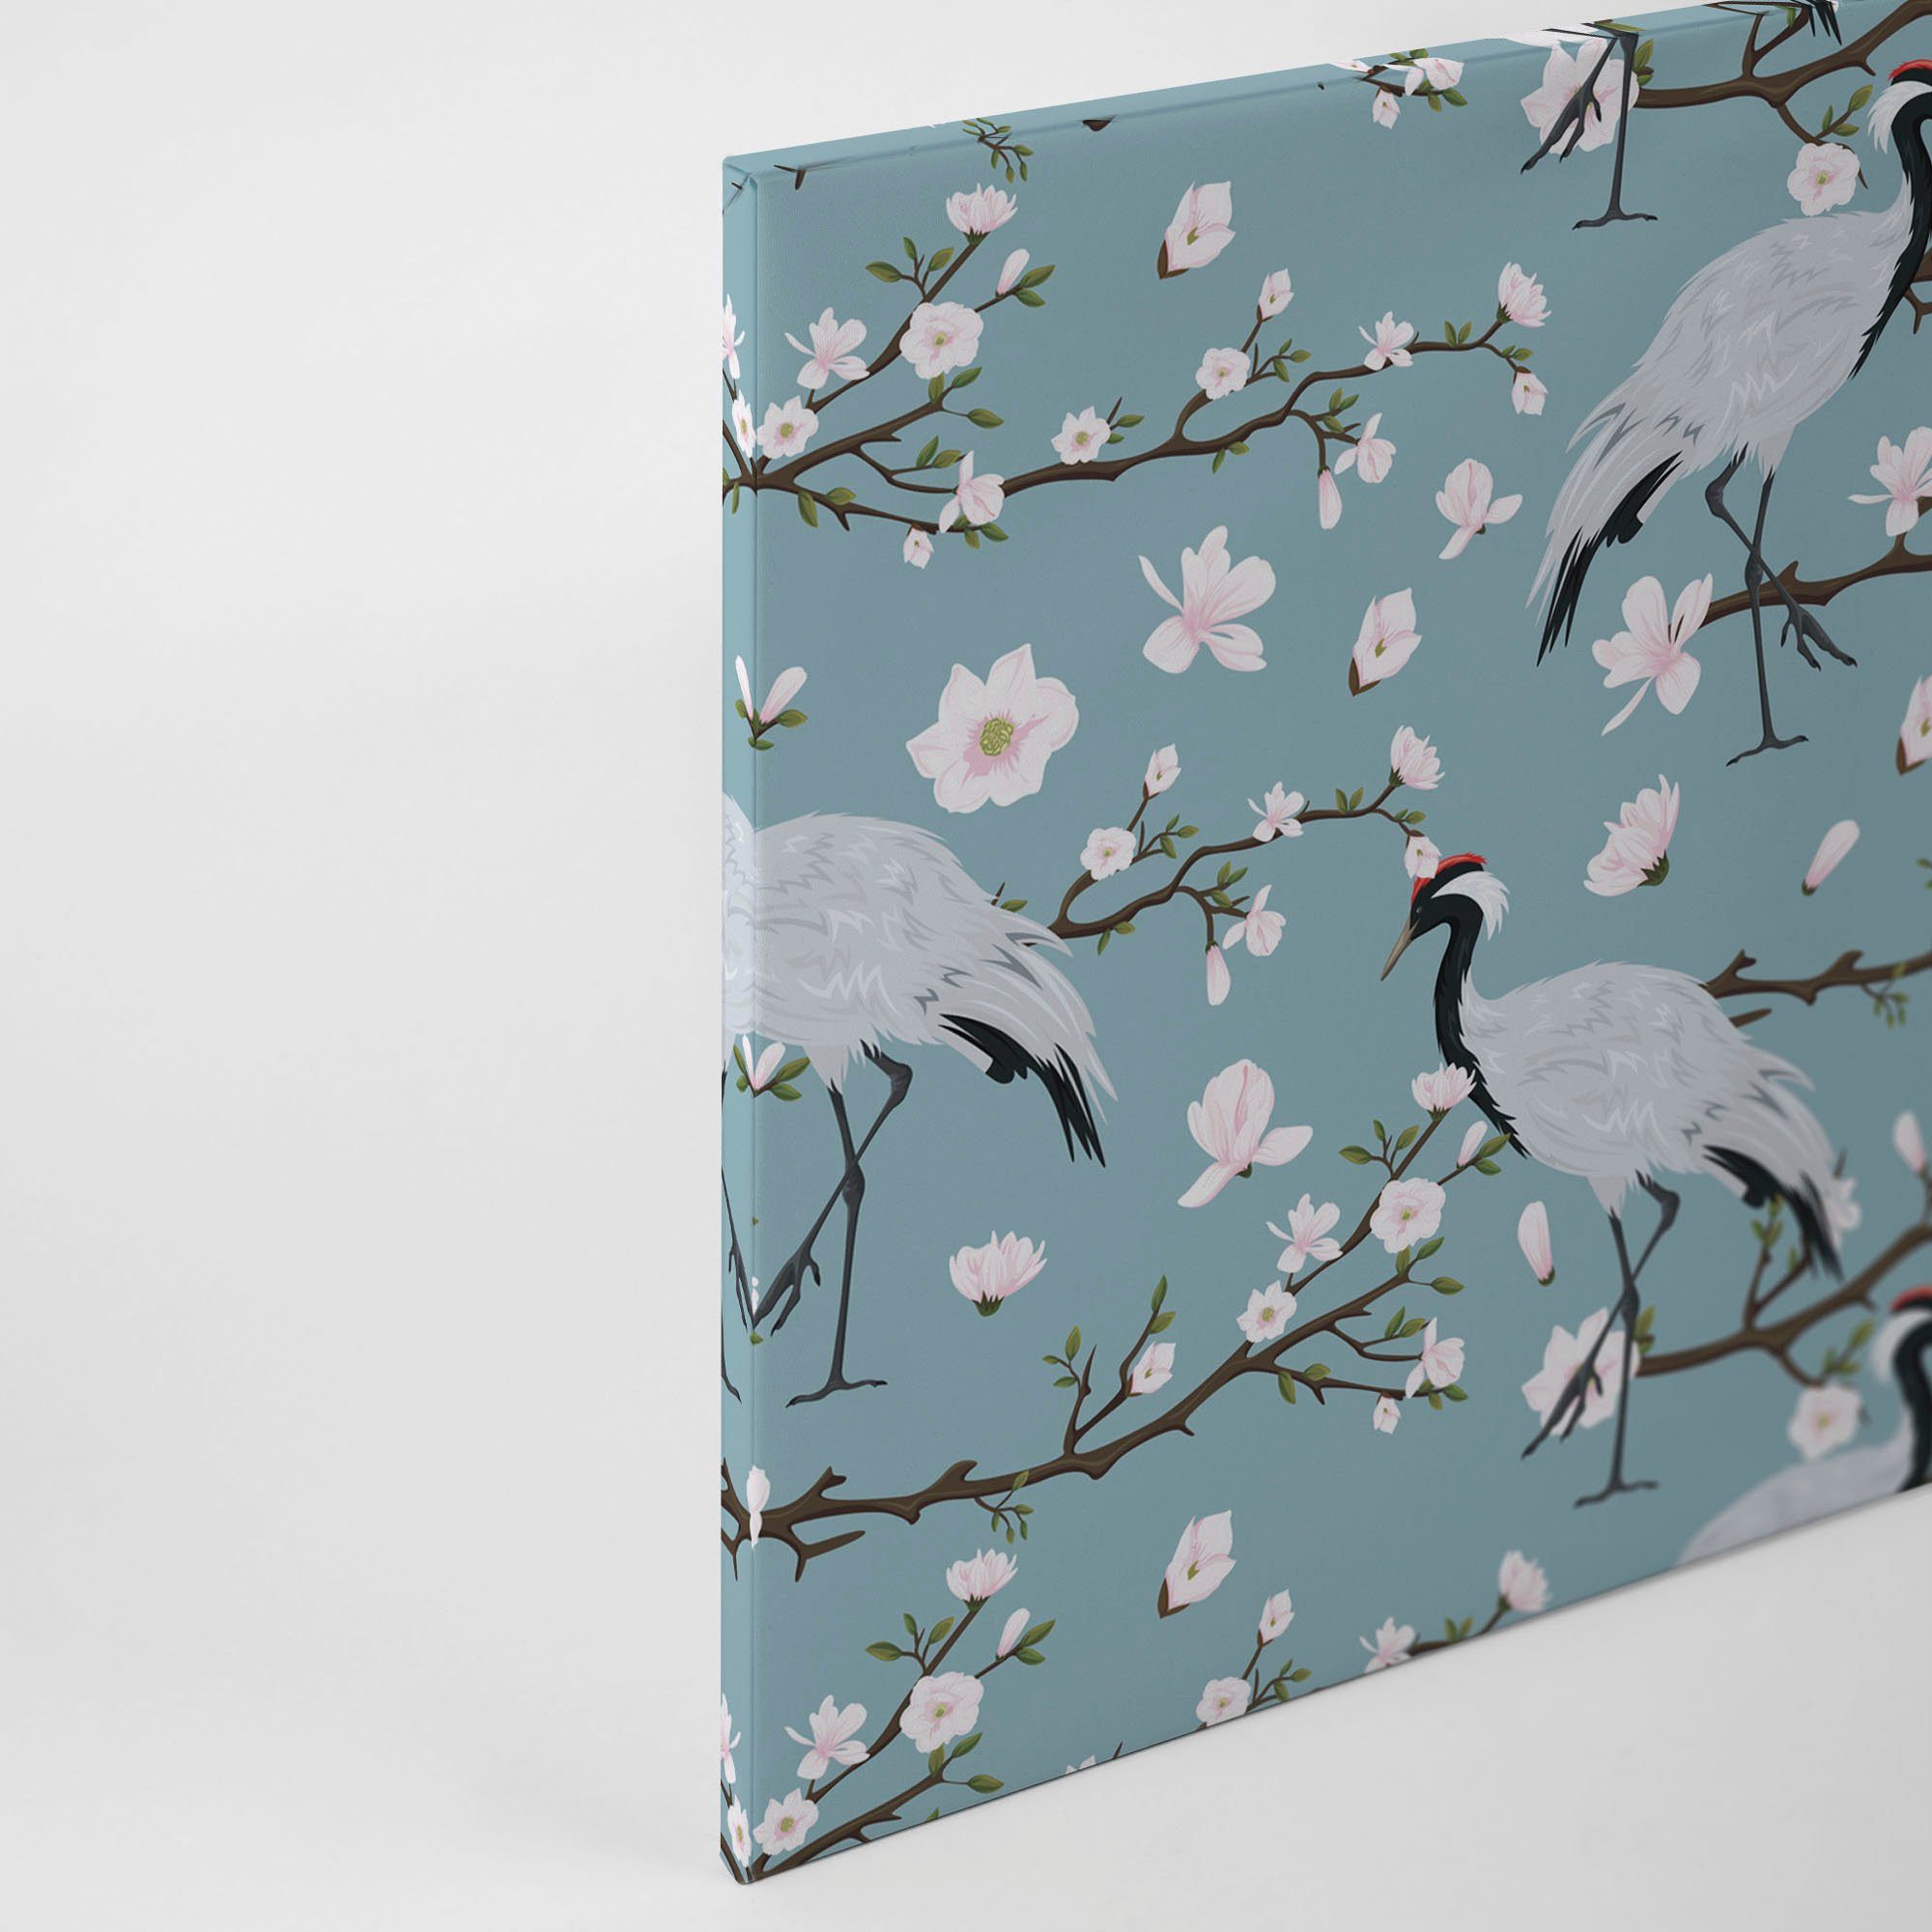 A.S. Blumen Leinwandbild Cranes, Création Japanese St), Asiatisch (1 Kranich Keilrahmen